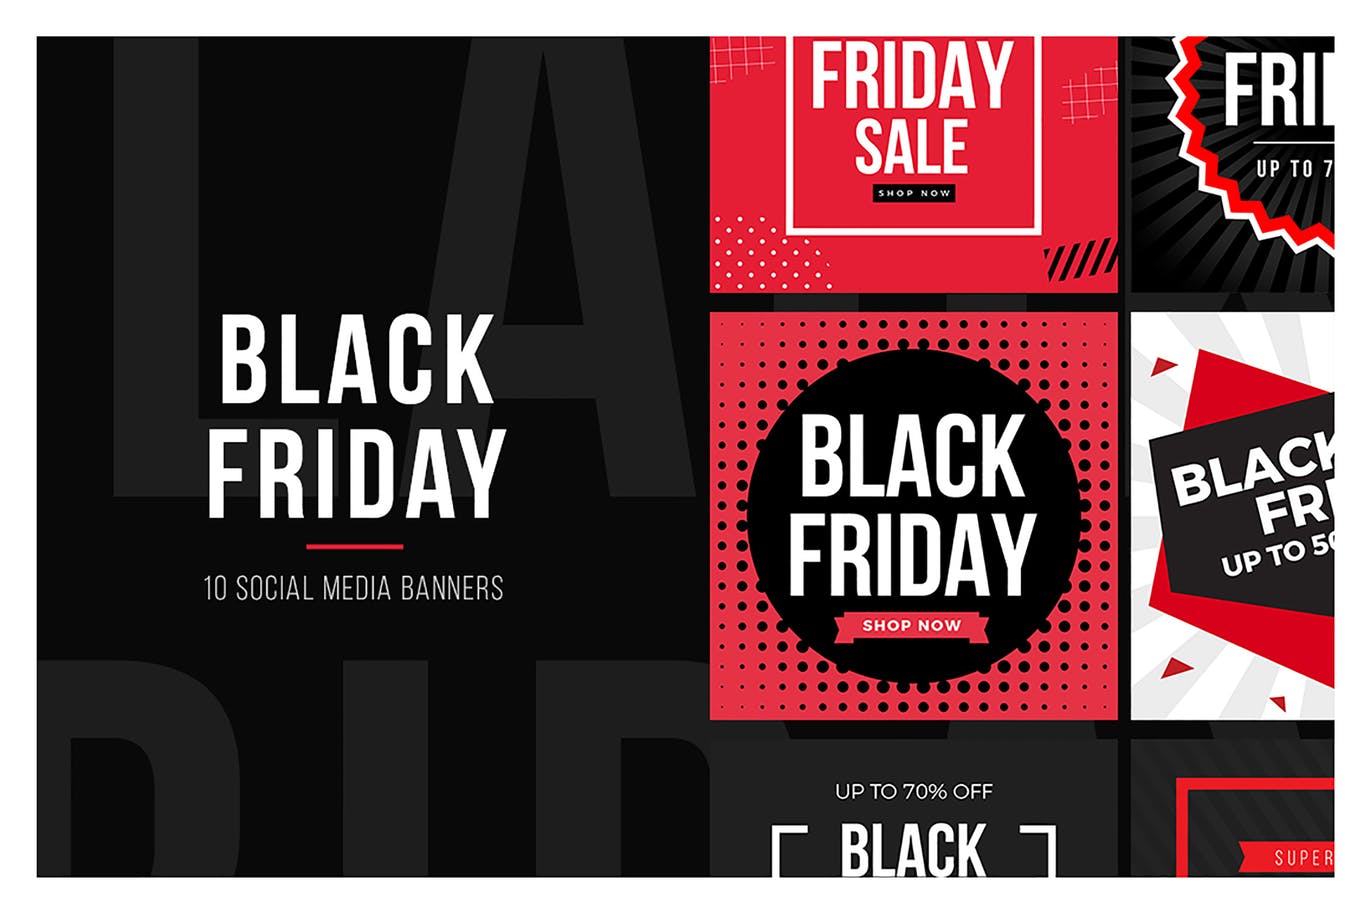 社交媒体黒五购物节促销广告Banner设计模板第一素材精选v3 Black Friday Social Media Banners V3插图